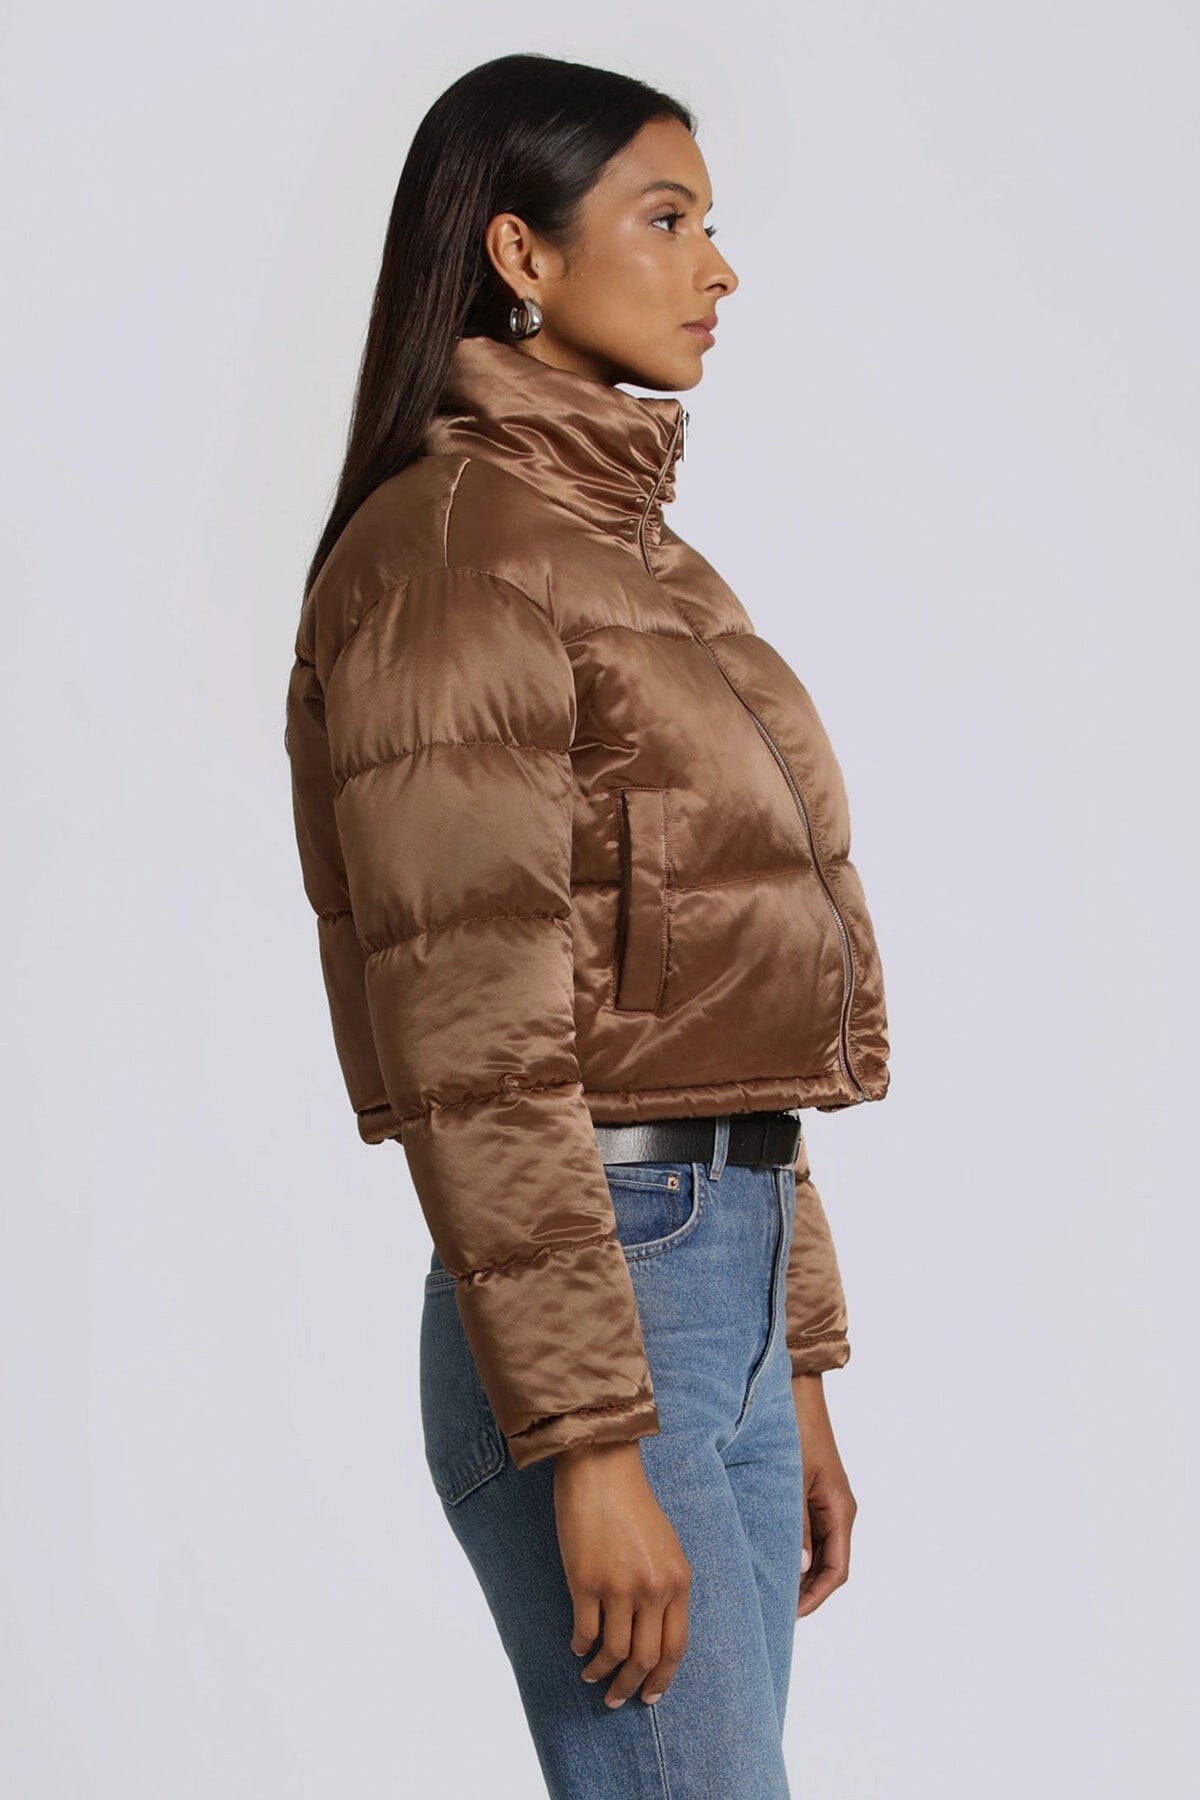 copper brown cropped satin puffer jacket coat women's cute cozy fall jackets